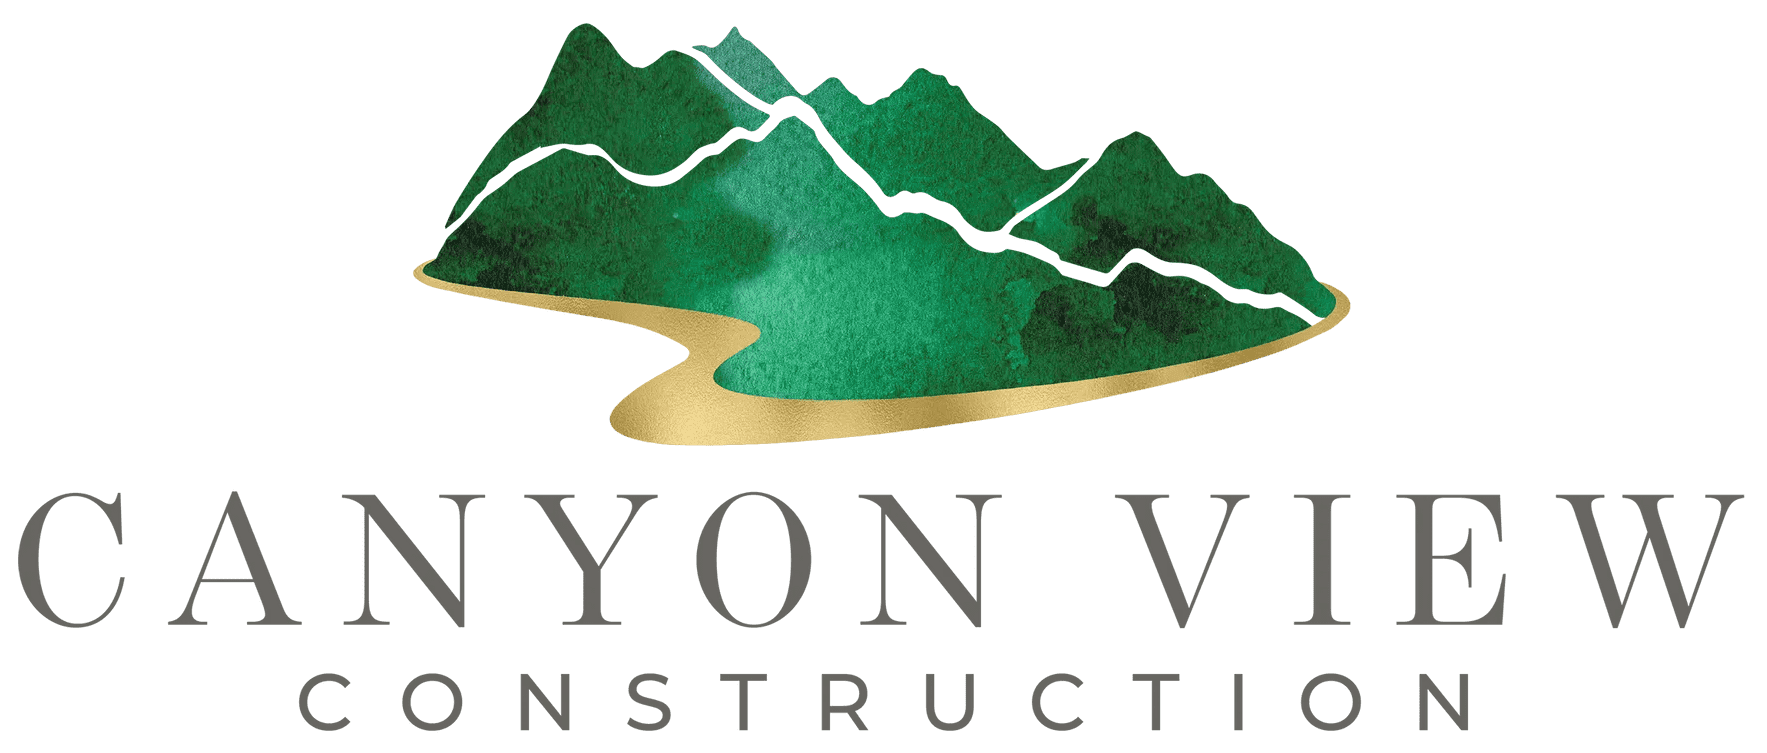 Canyon View Construction